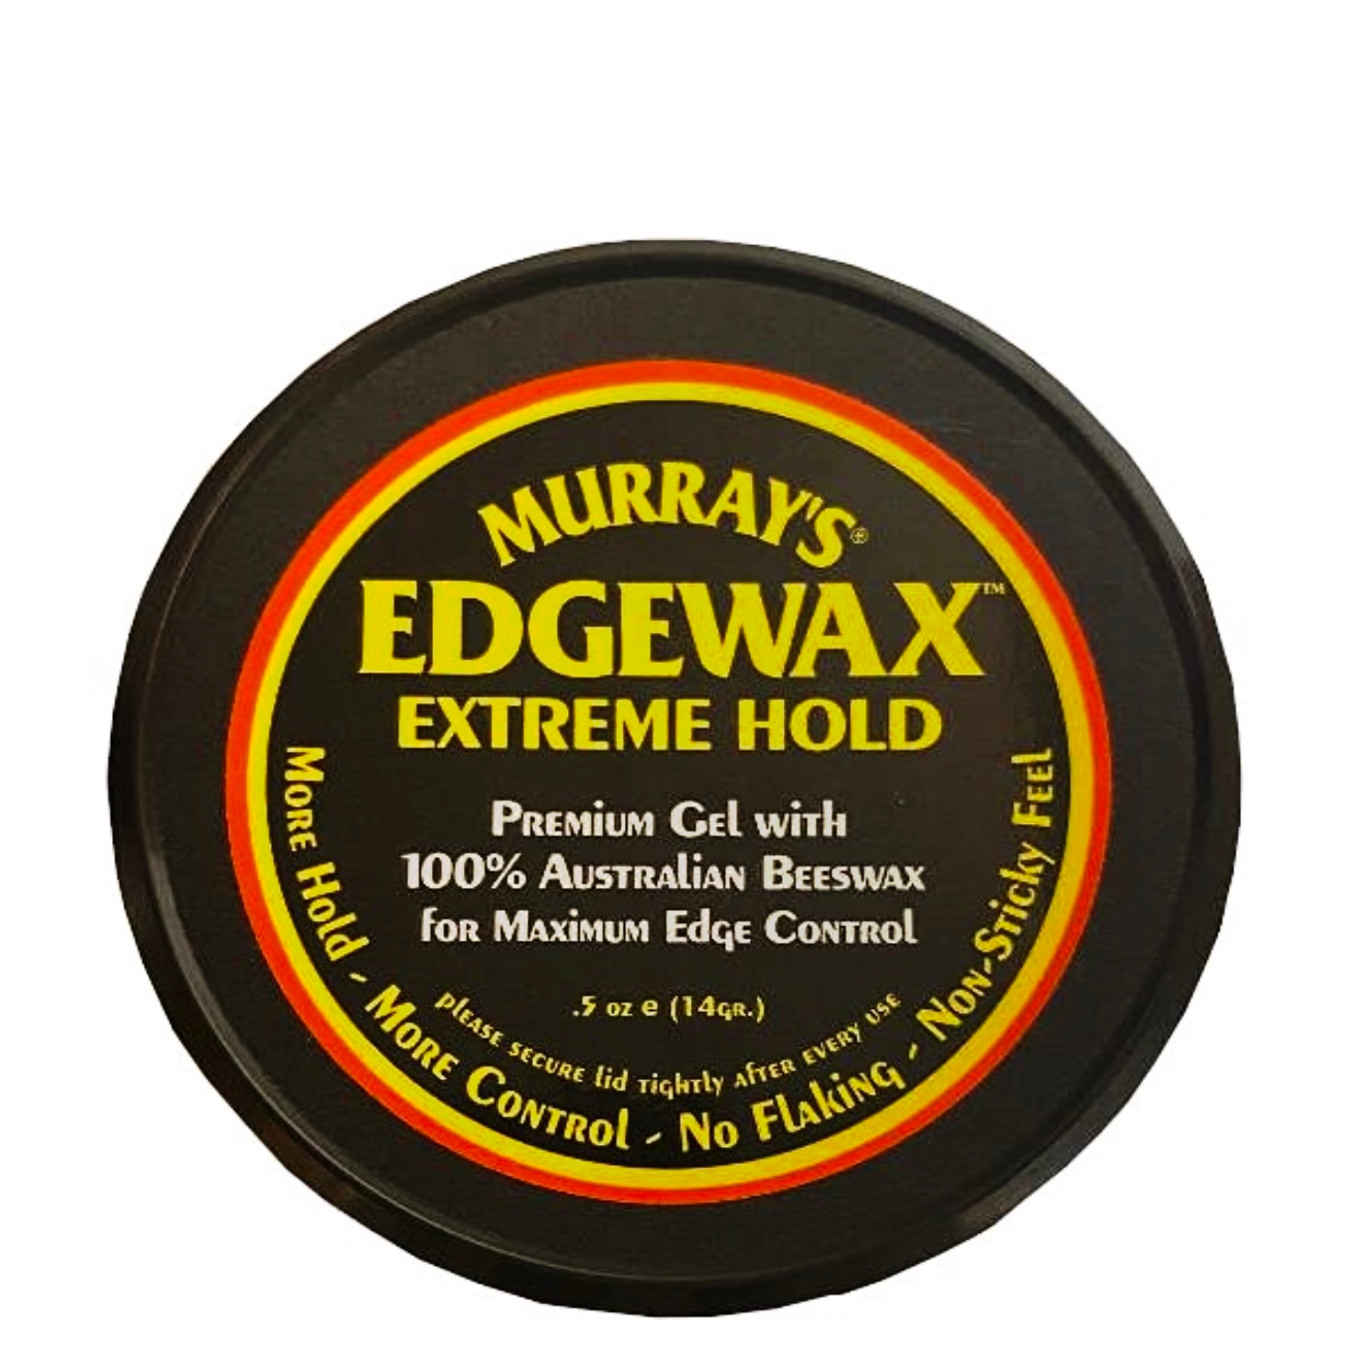 Murray's Edgewax 100% Australian Beeswax [Extreme Hold]